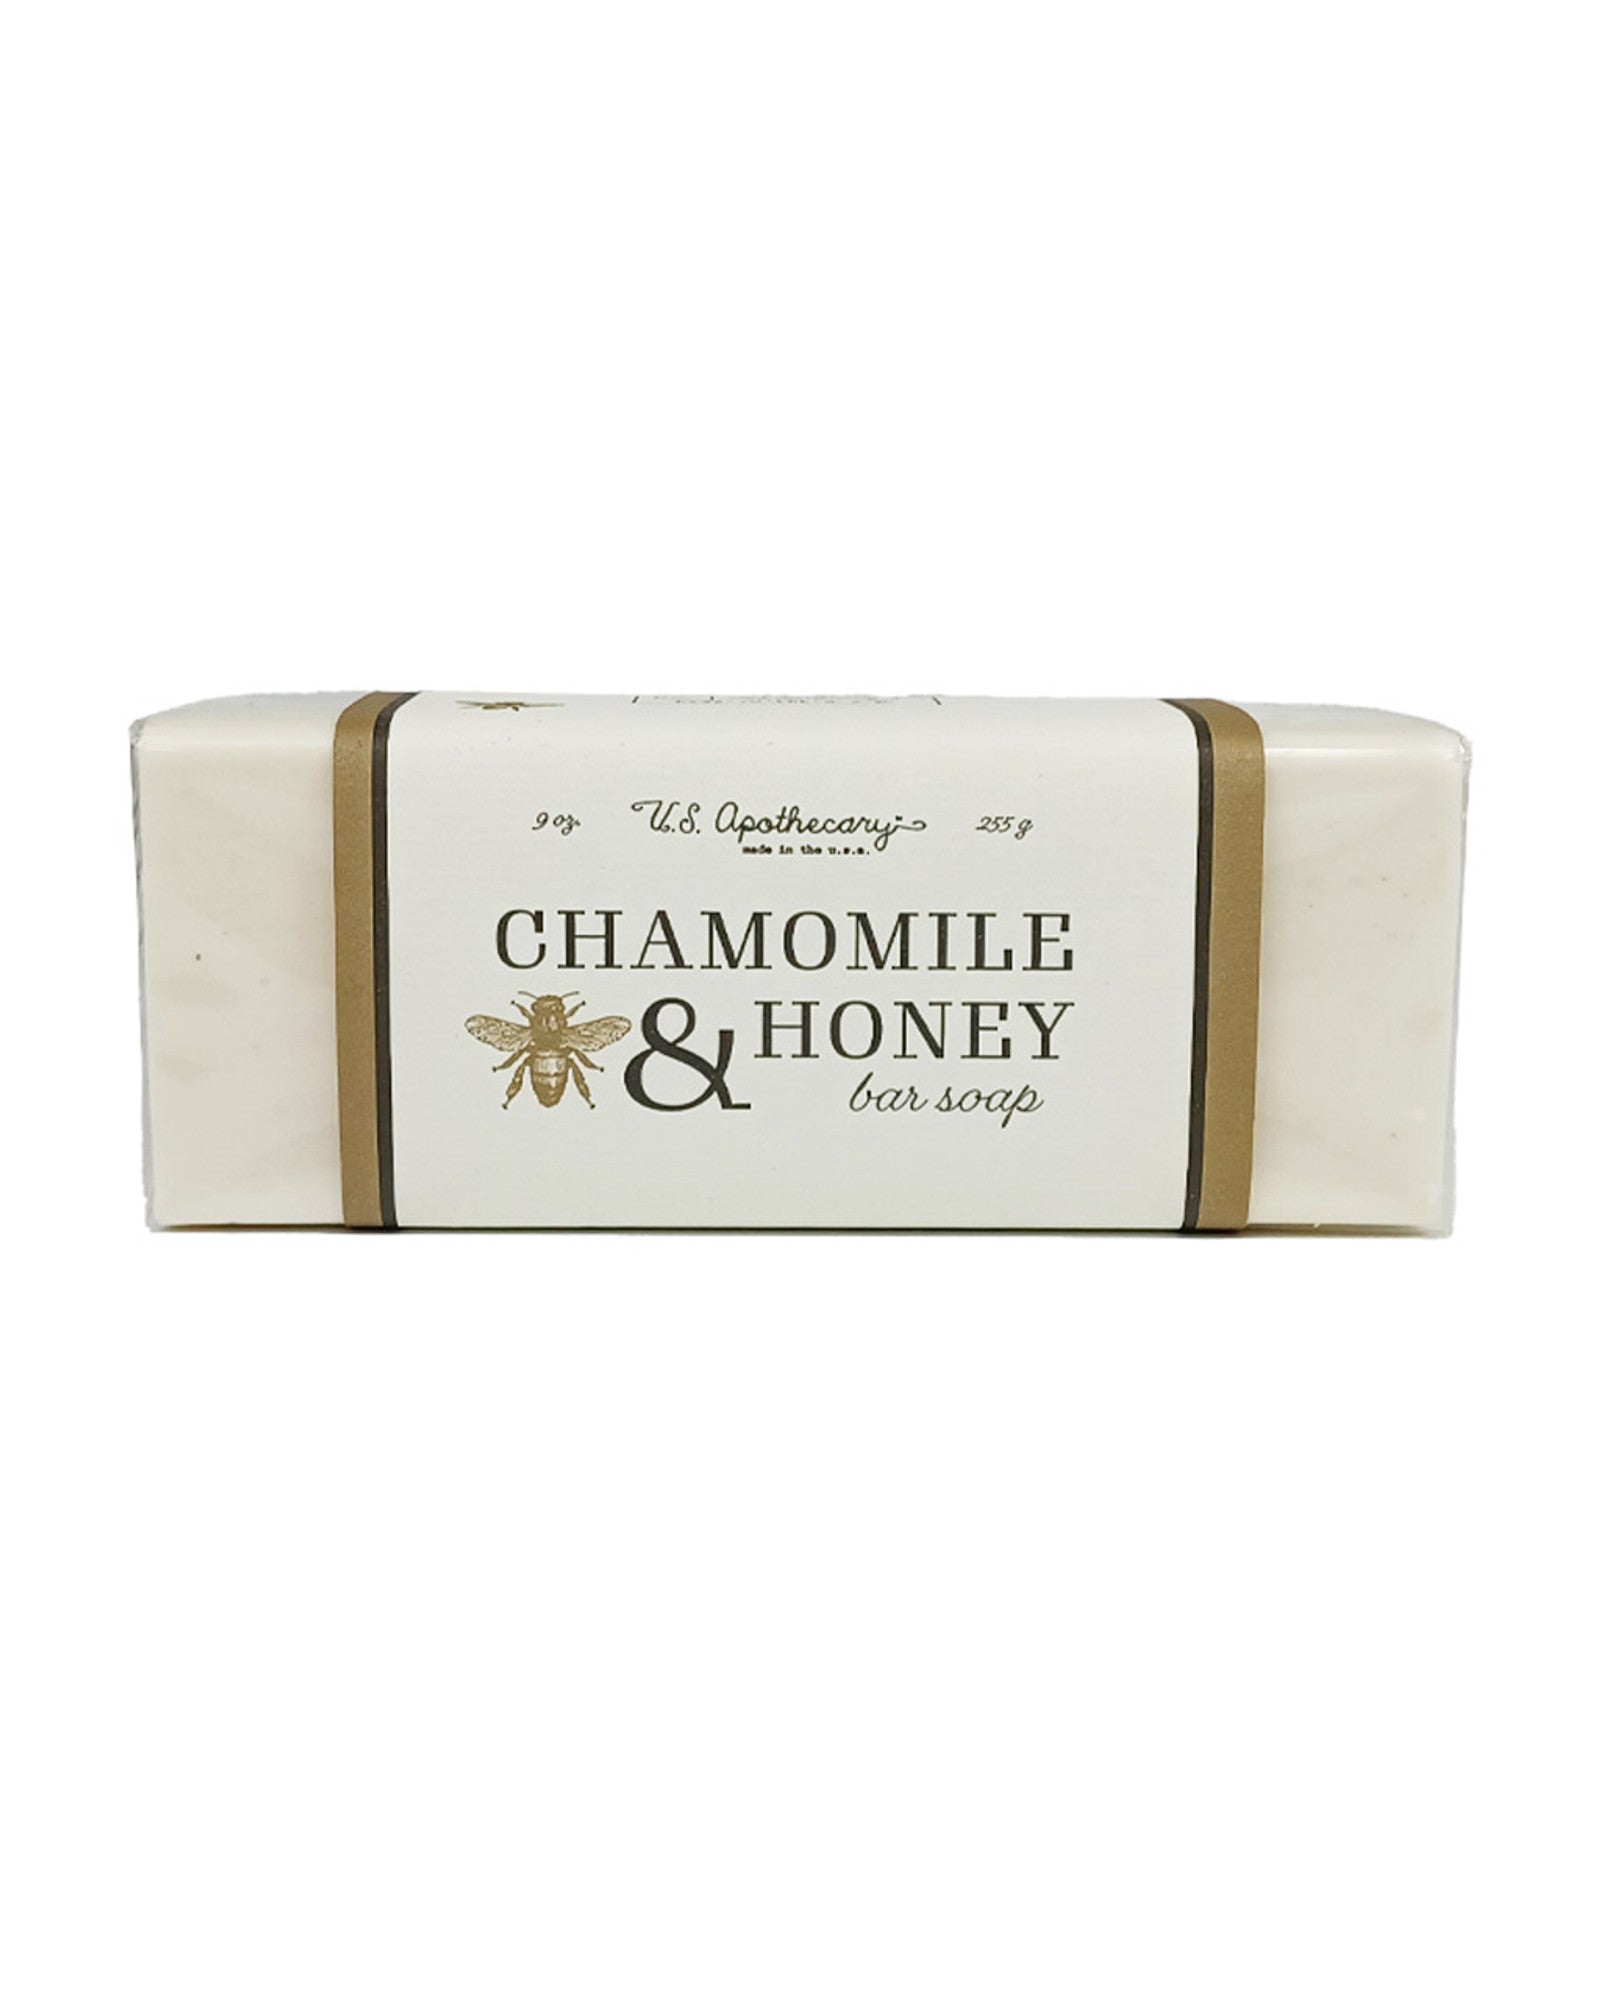 9oz CHAMOMILE & HONEY BAR SOAP